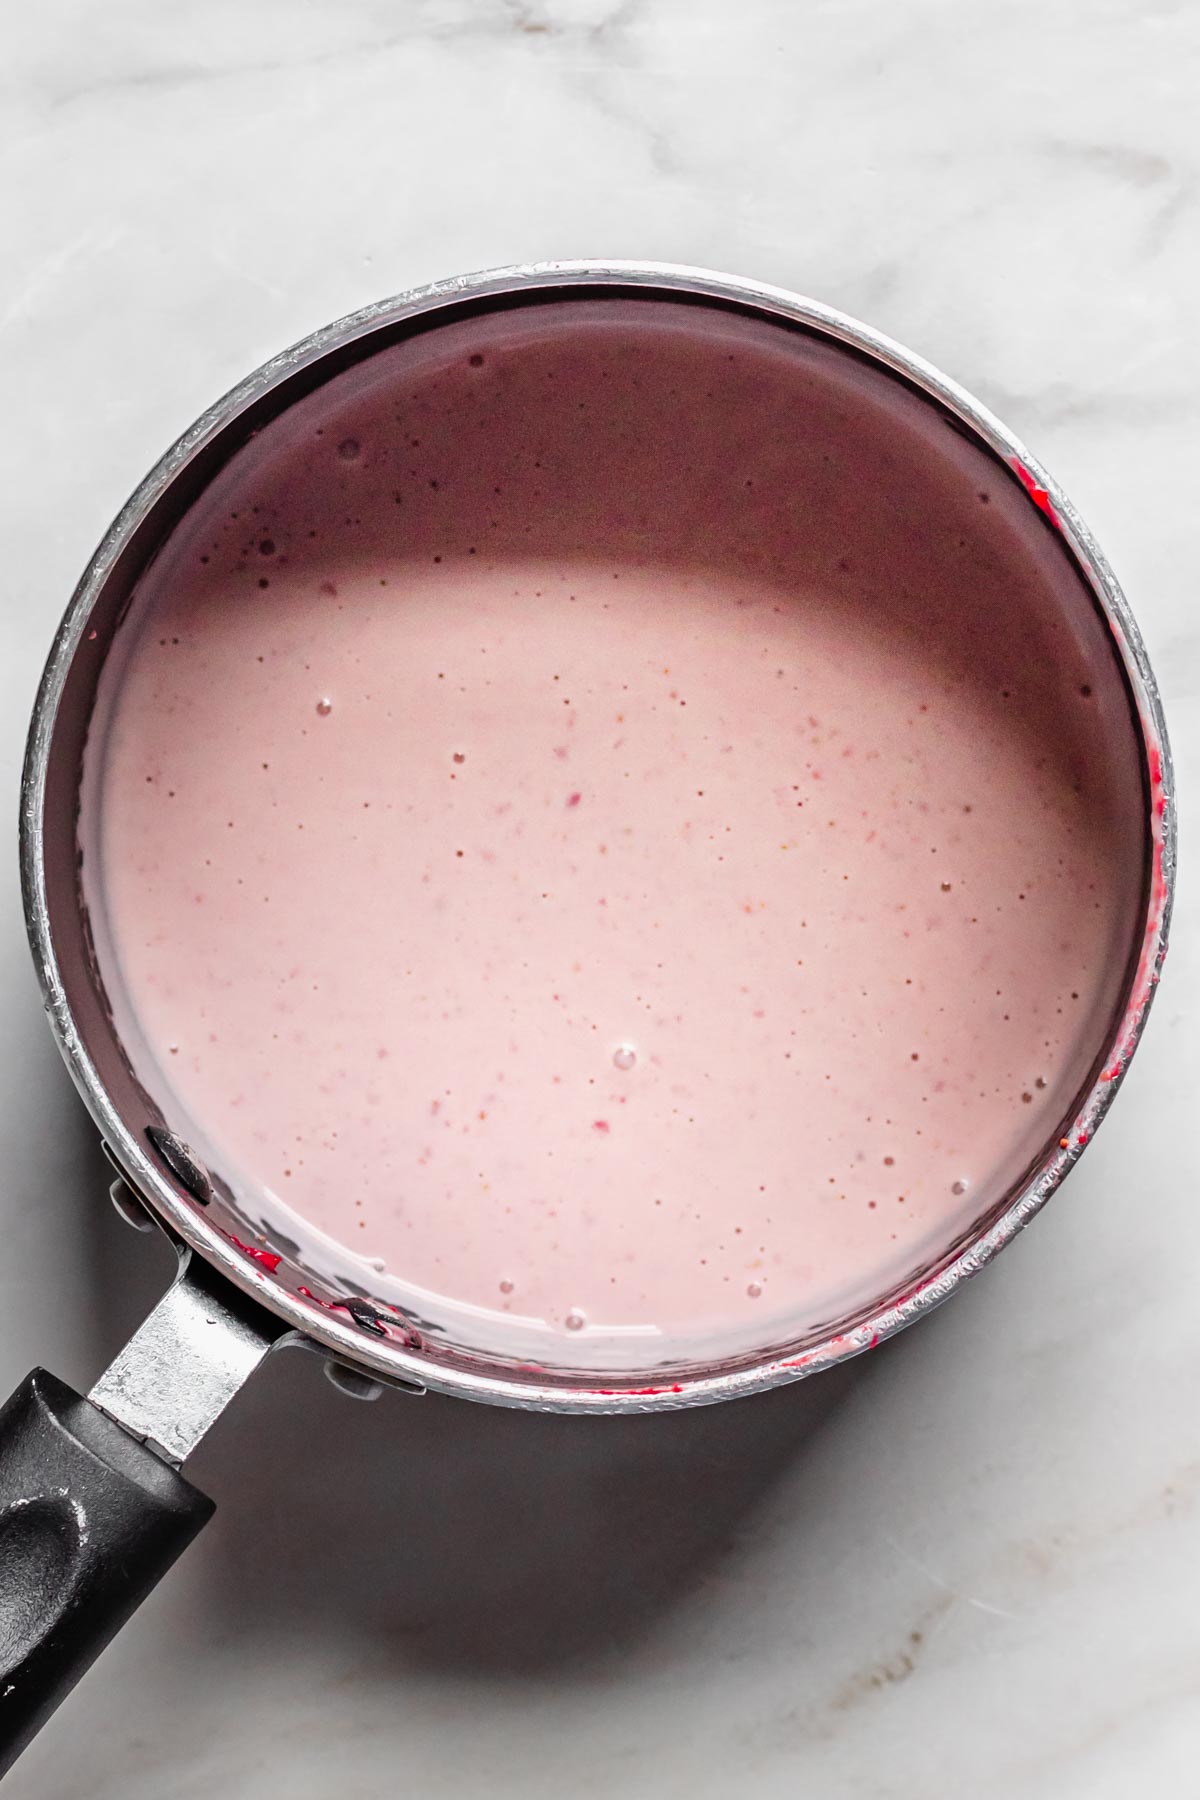 Light pink heavy cream in the saucepan.